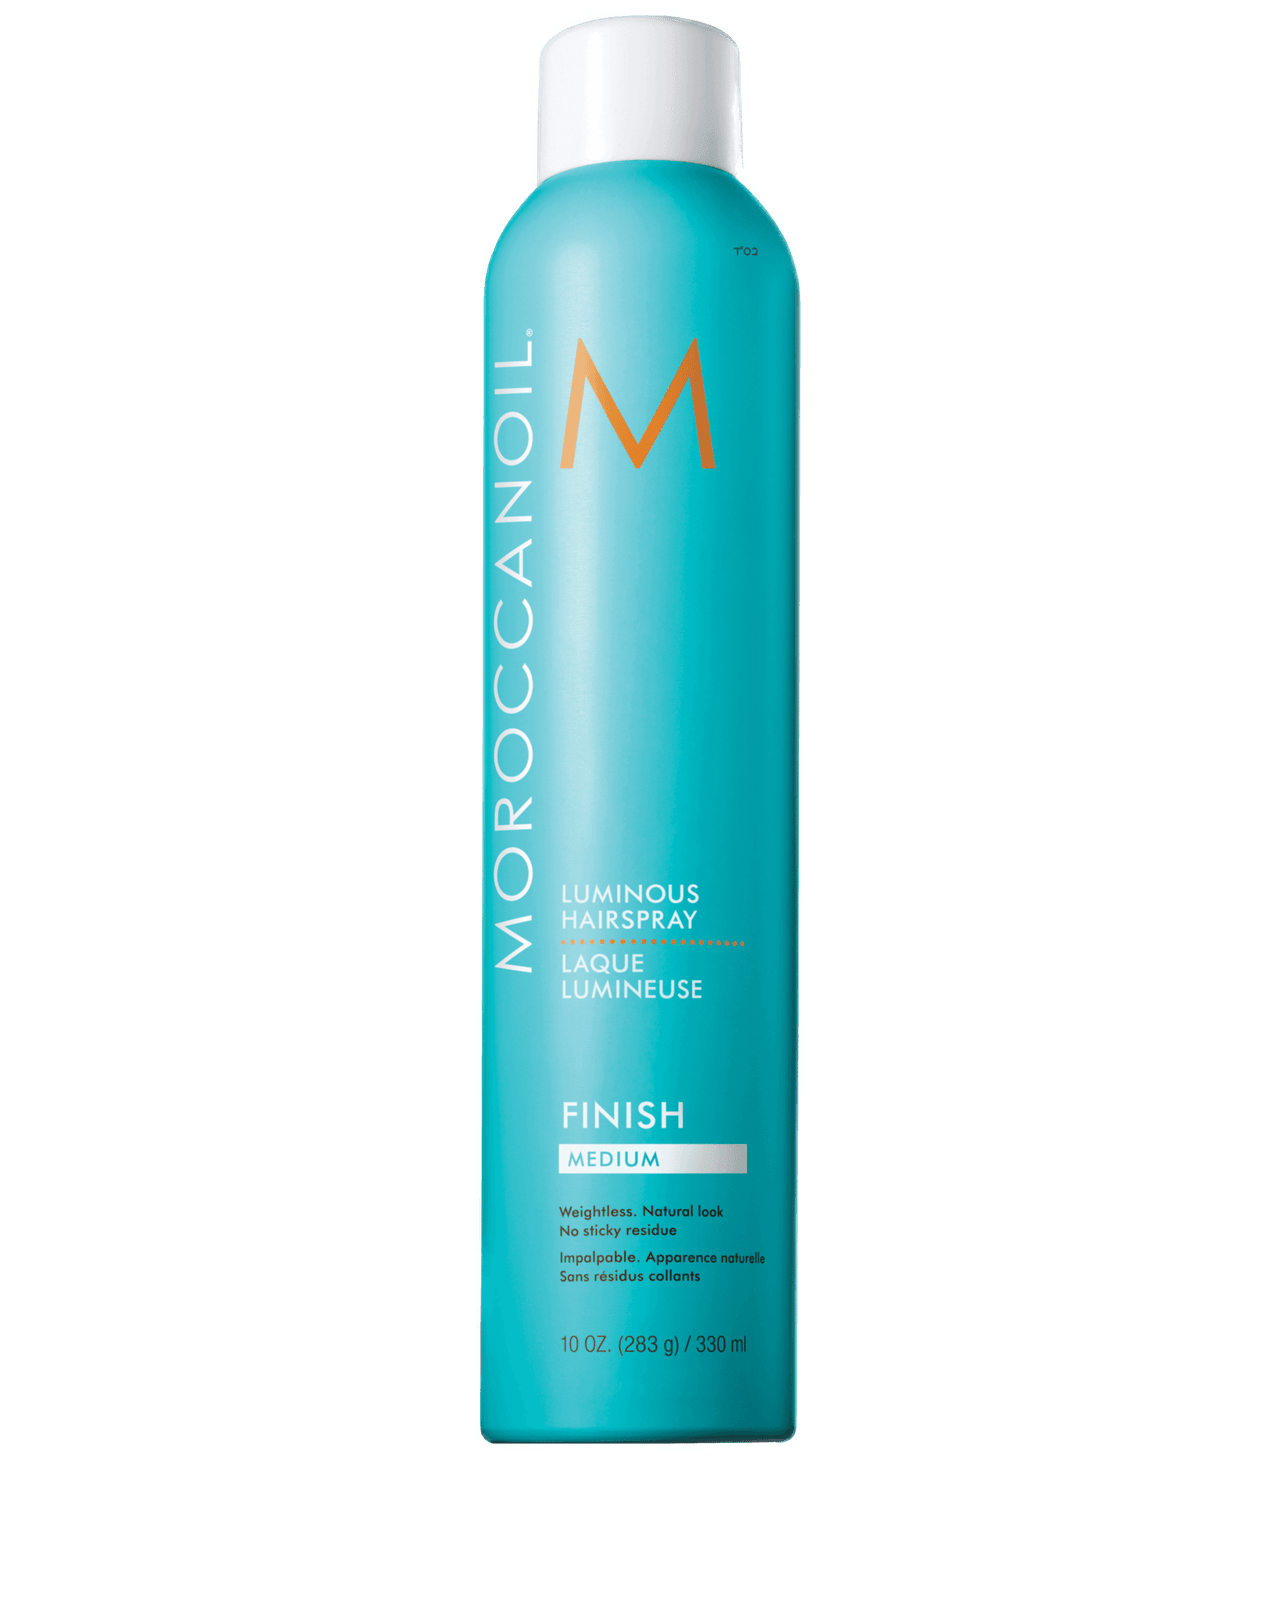 Moroccanoil Luminous Hairspray Medium 330mL